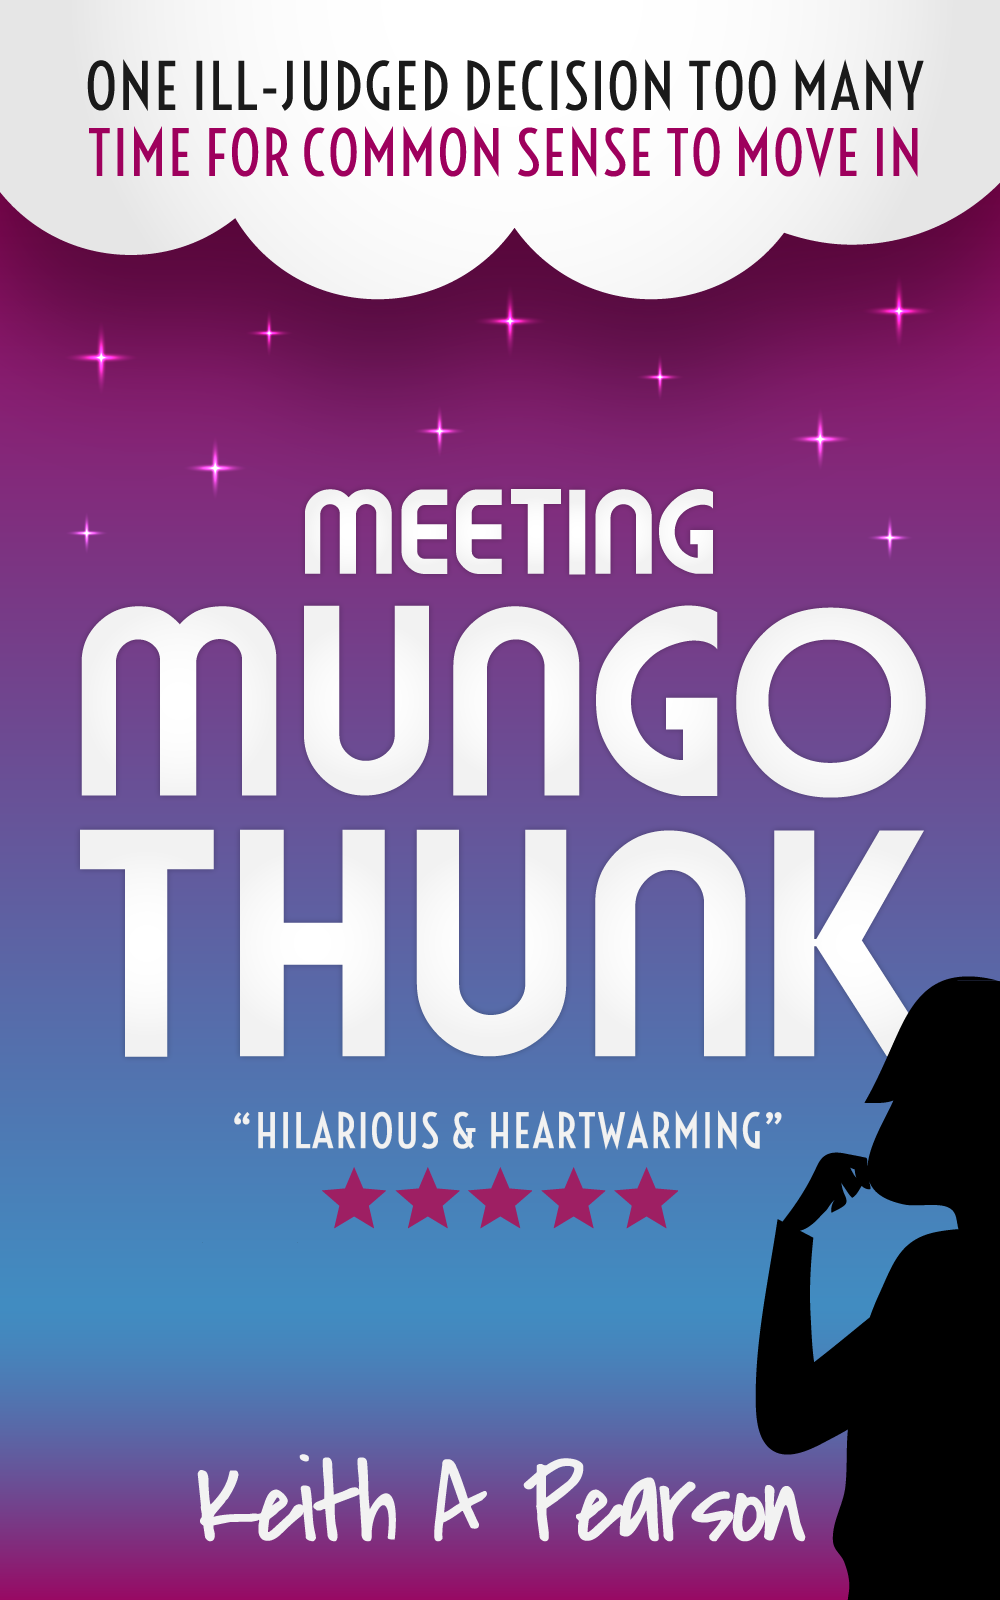 Keith A. Pearson - Meeting Mungo Thunk